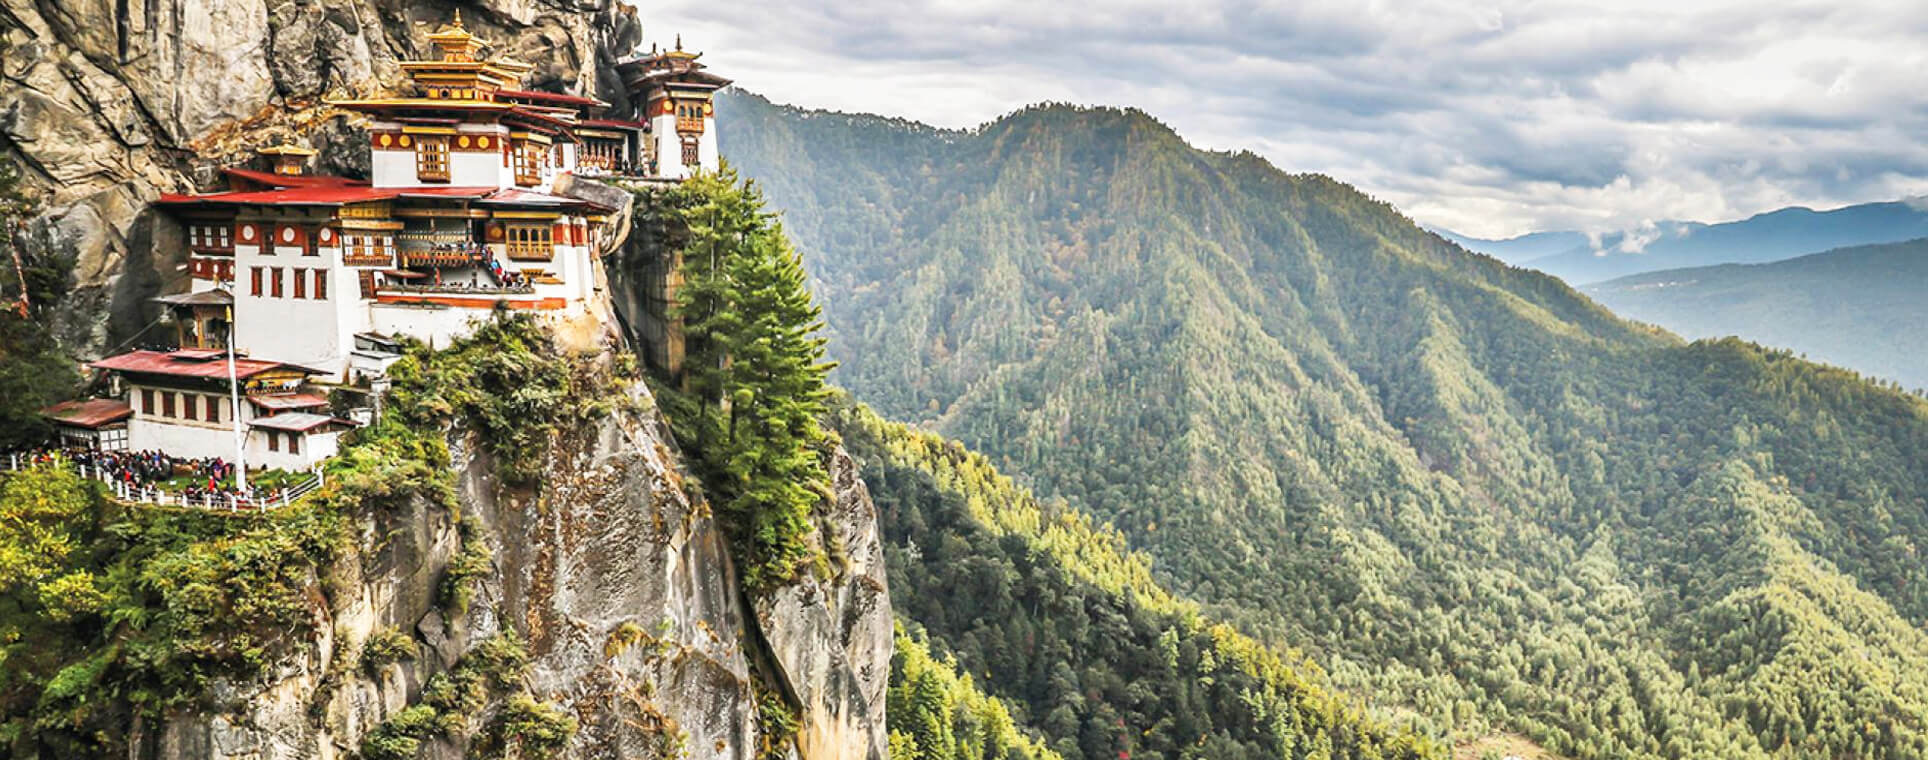 Bhutan: The Land Of The Thunder Dragon